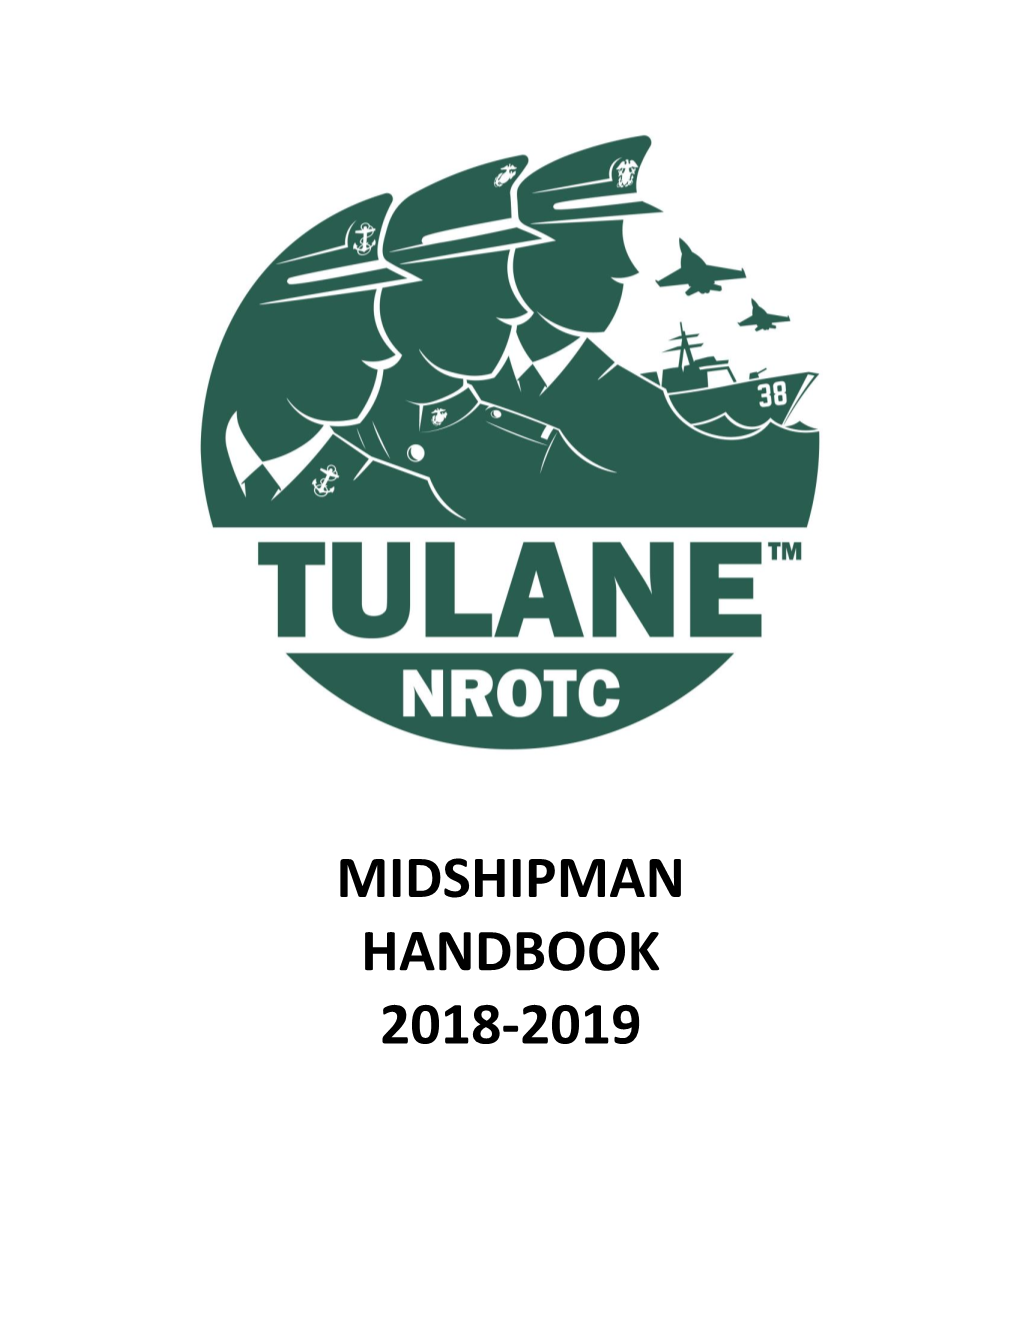 Midshipman Handbook 2018-2019